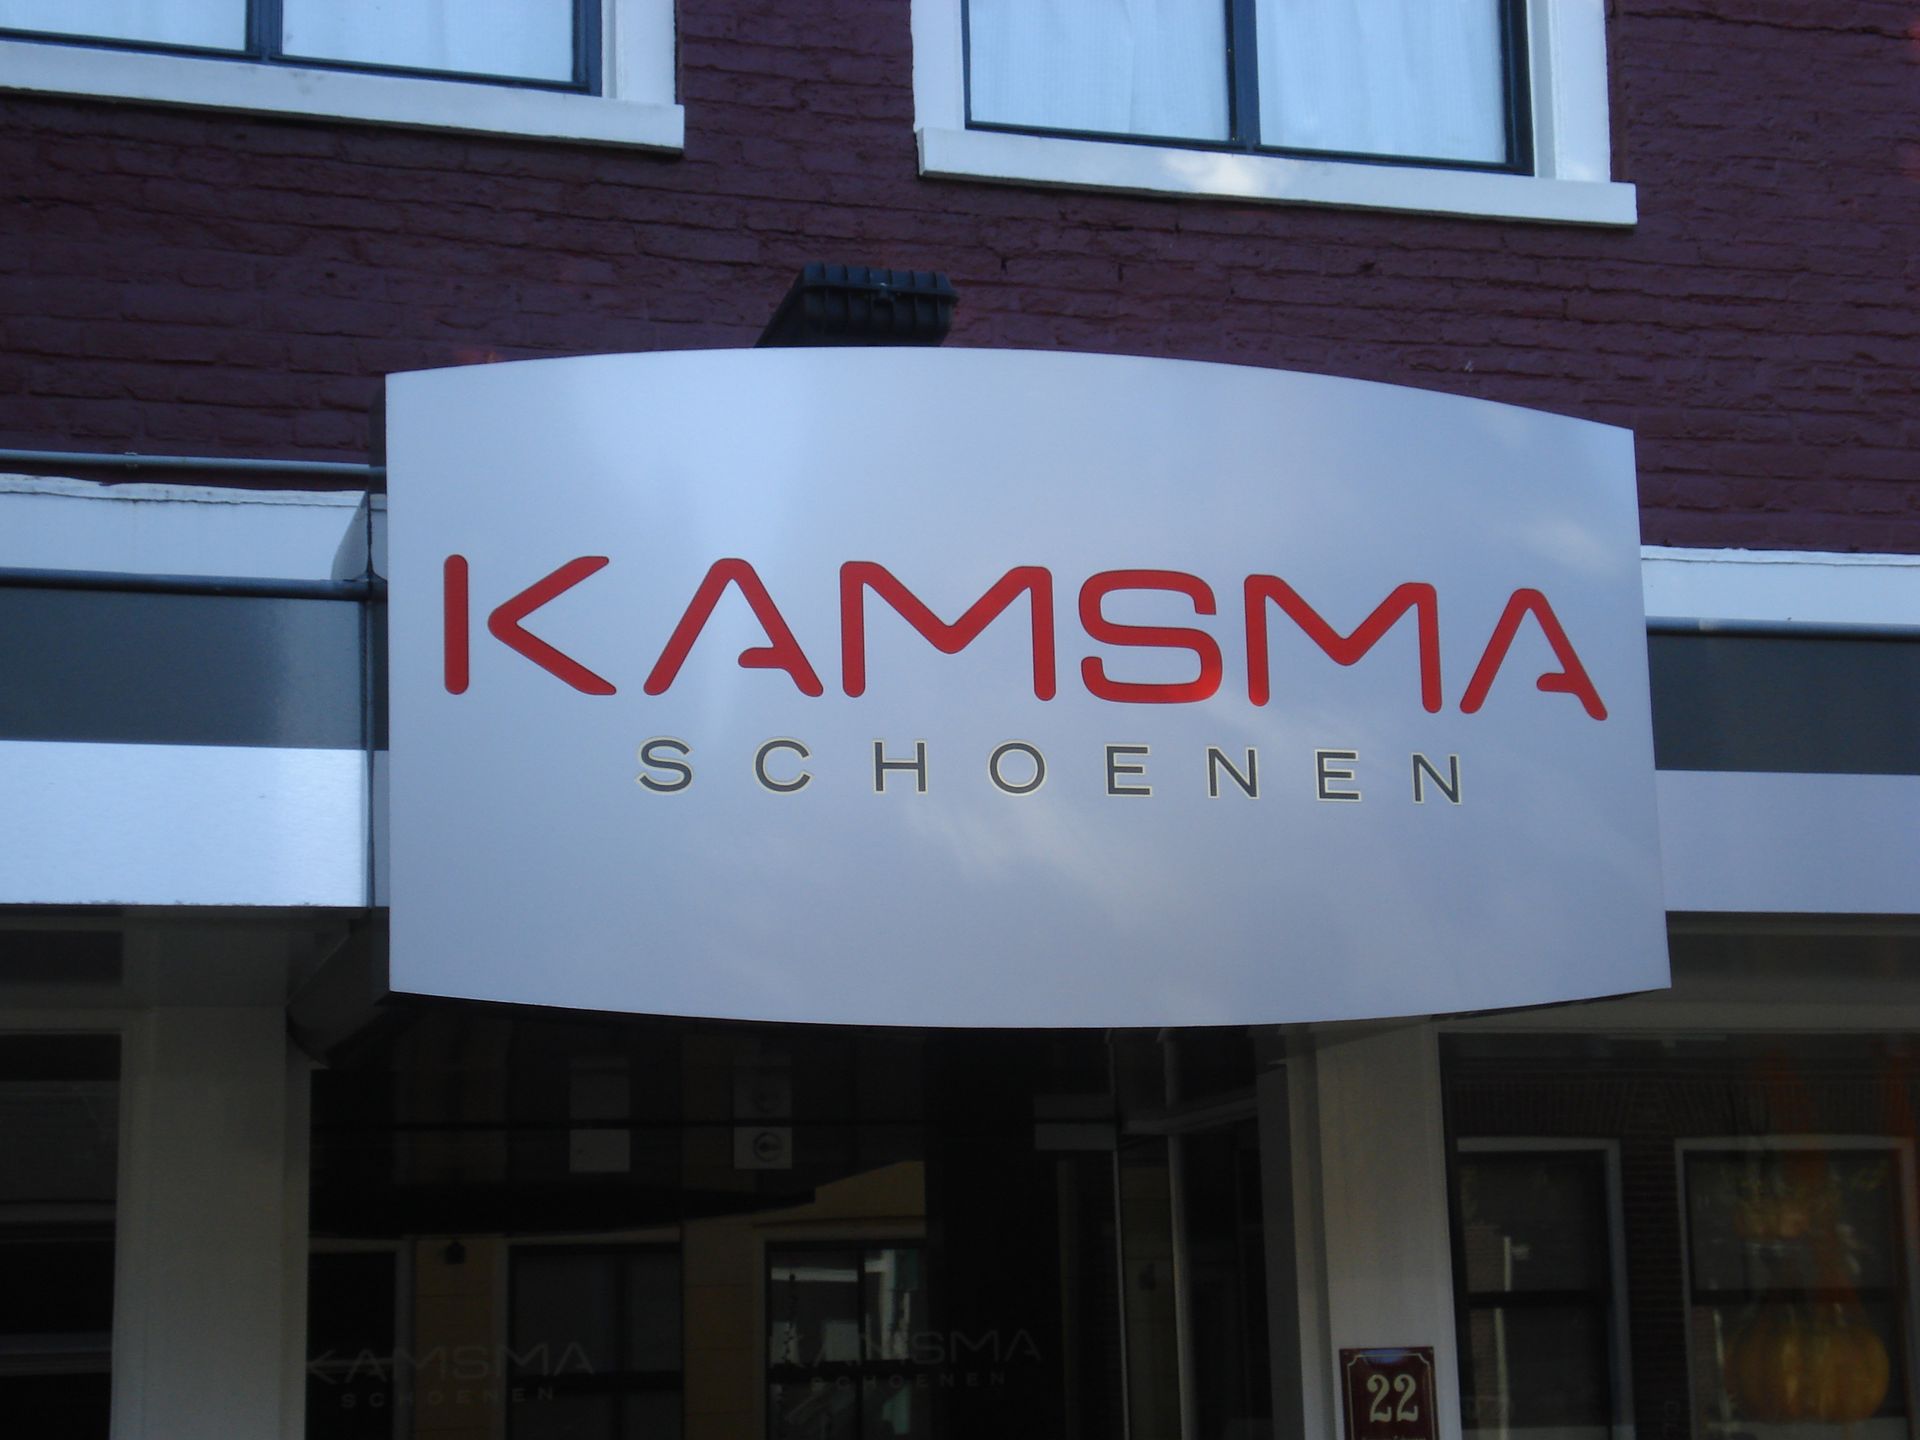 Buitenreclame - Kamsma Schoenen